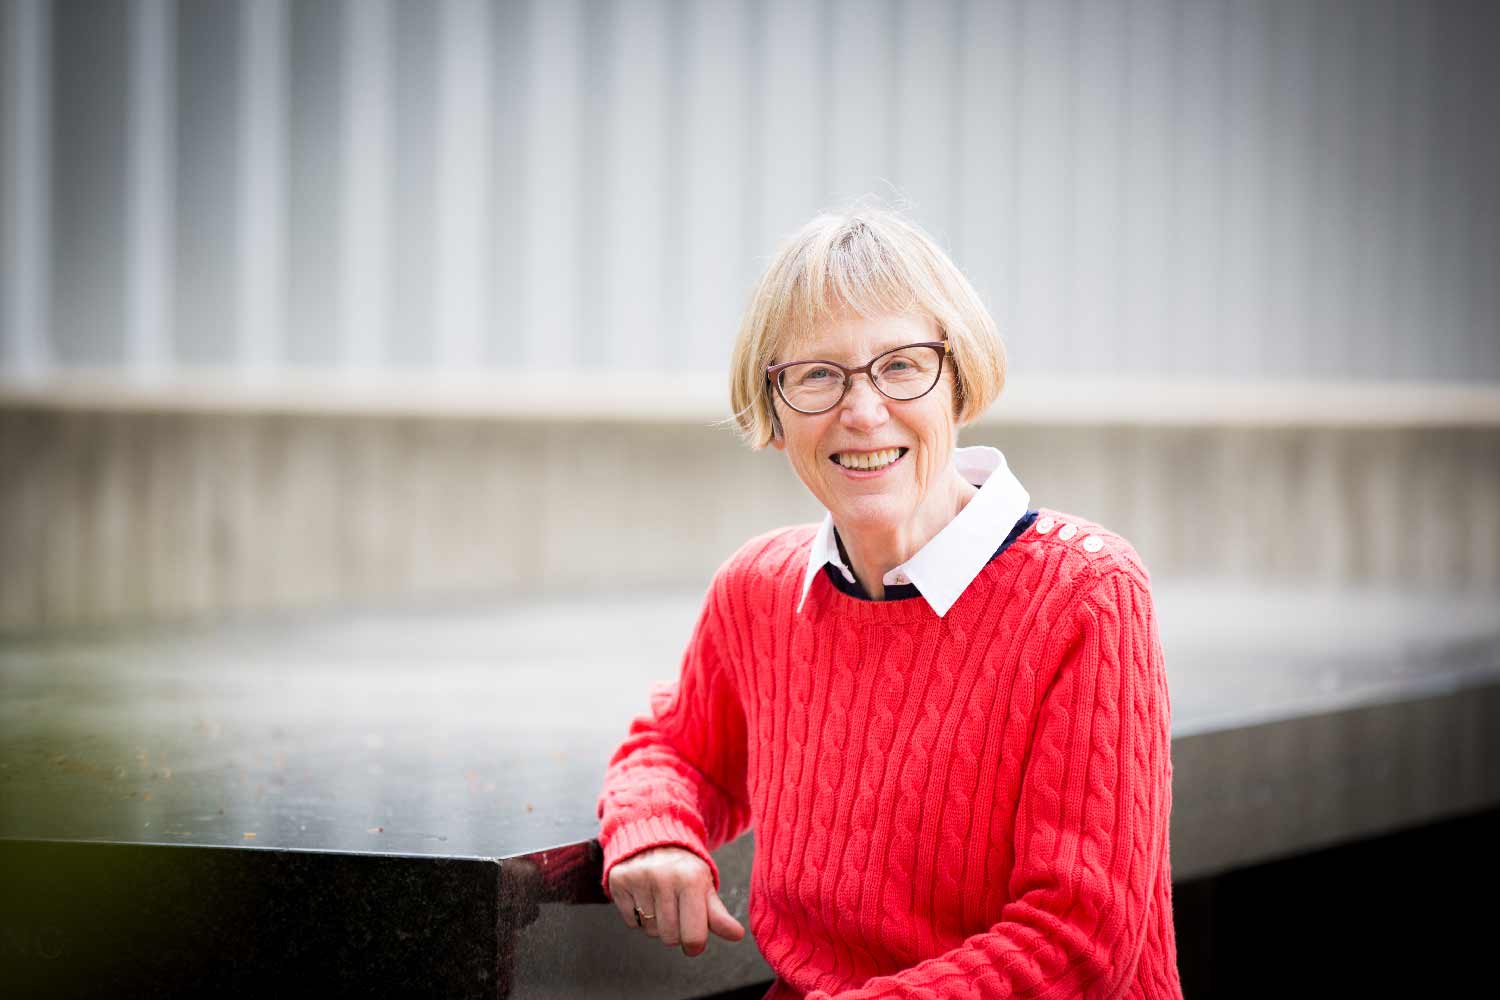 UC San Diego professor Nancy Cartwright